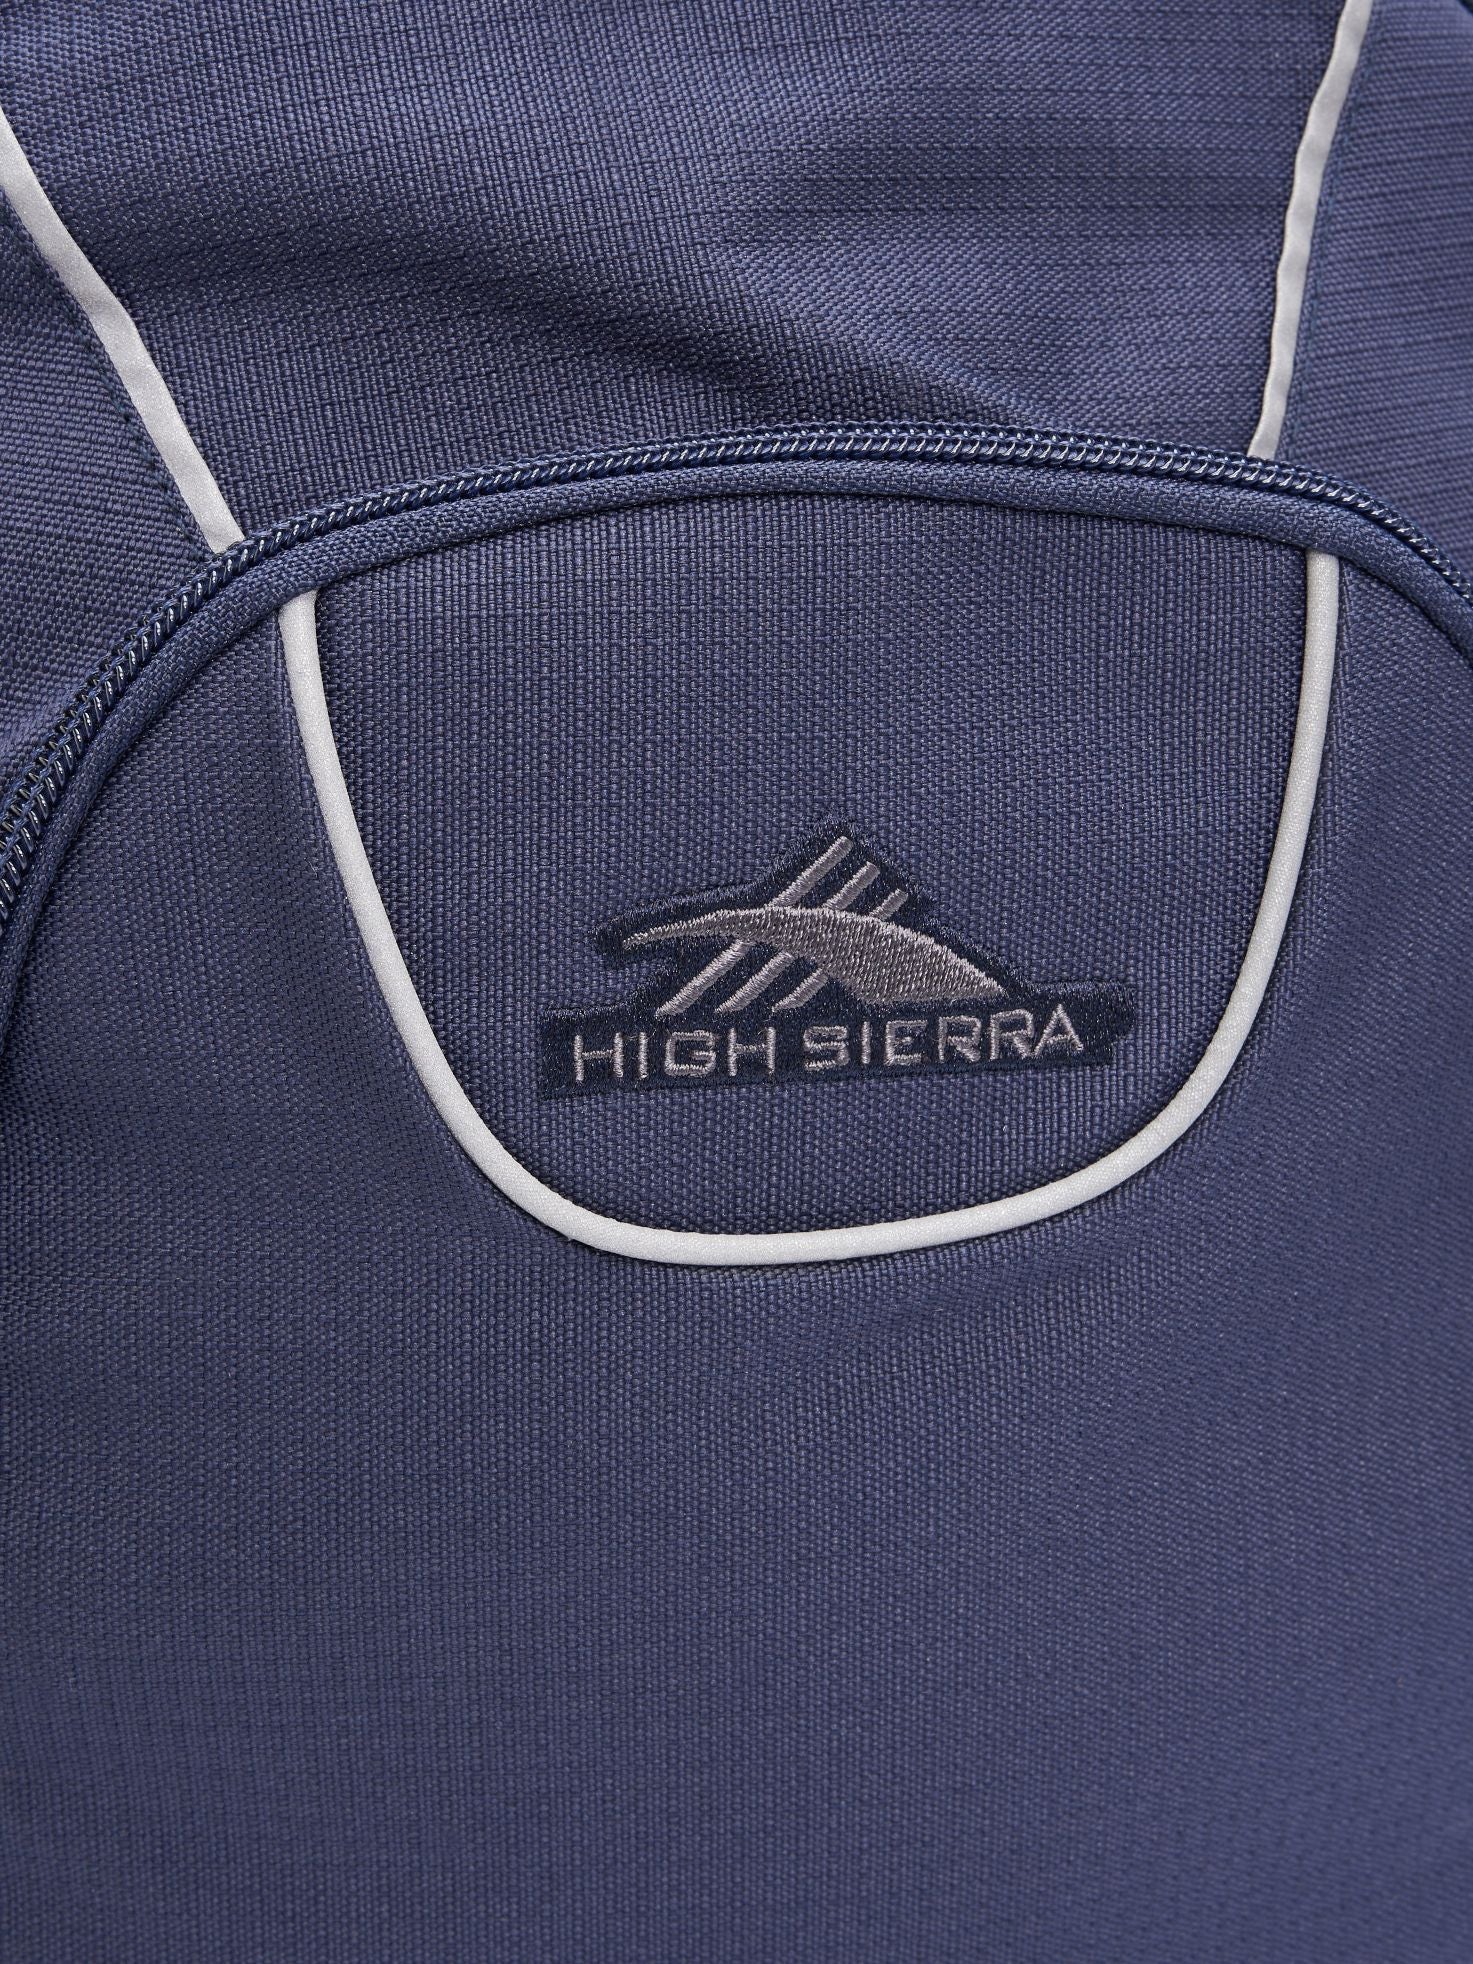 High Sierra - Academy 3.0 Backpack - Marine Blue-7